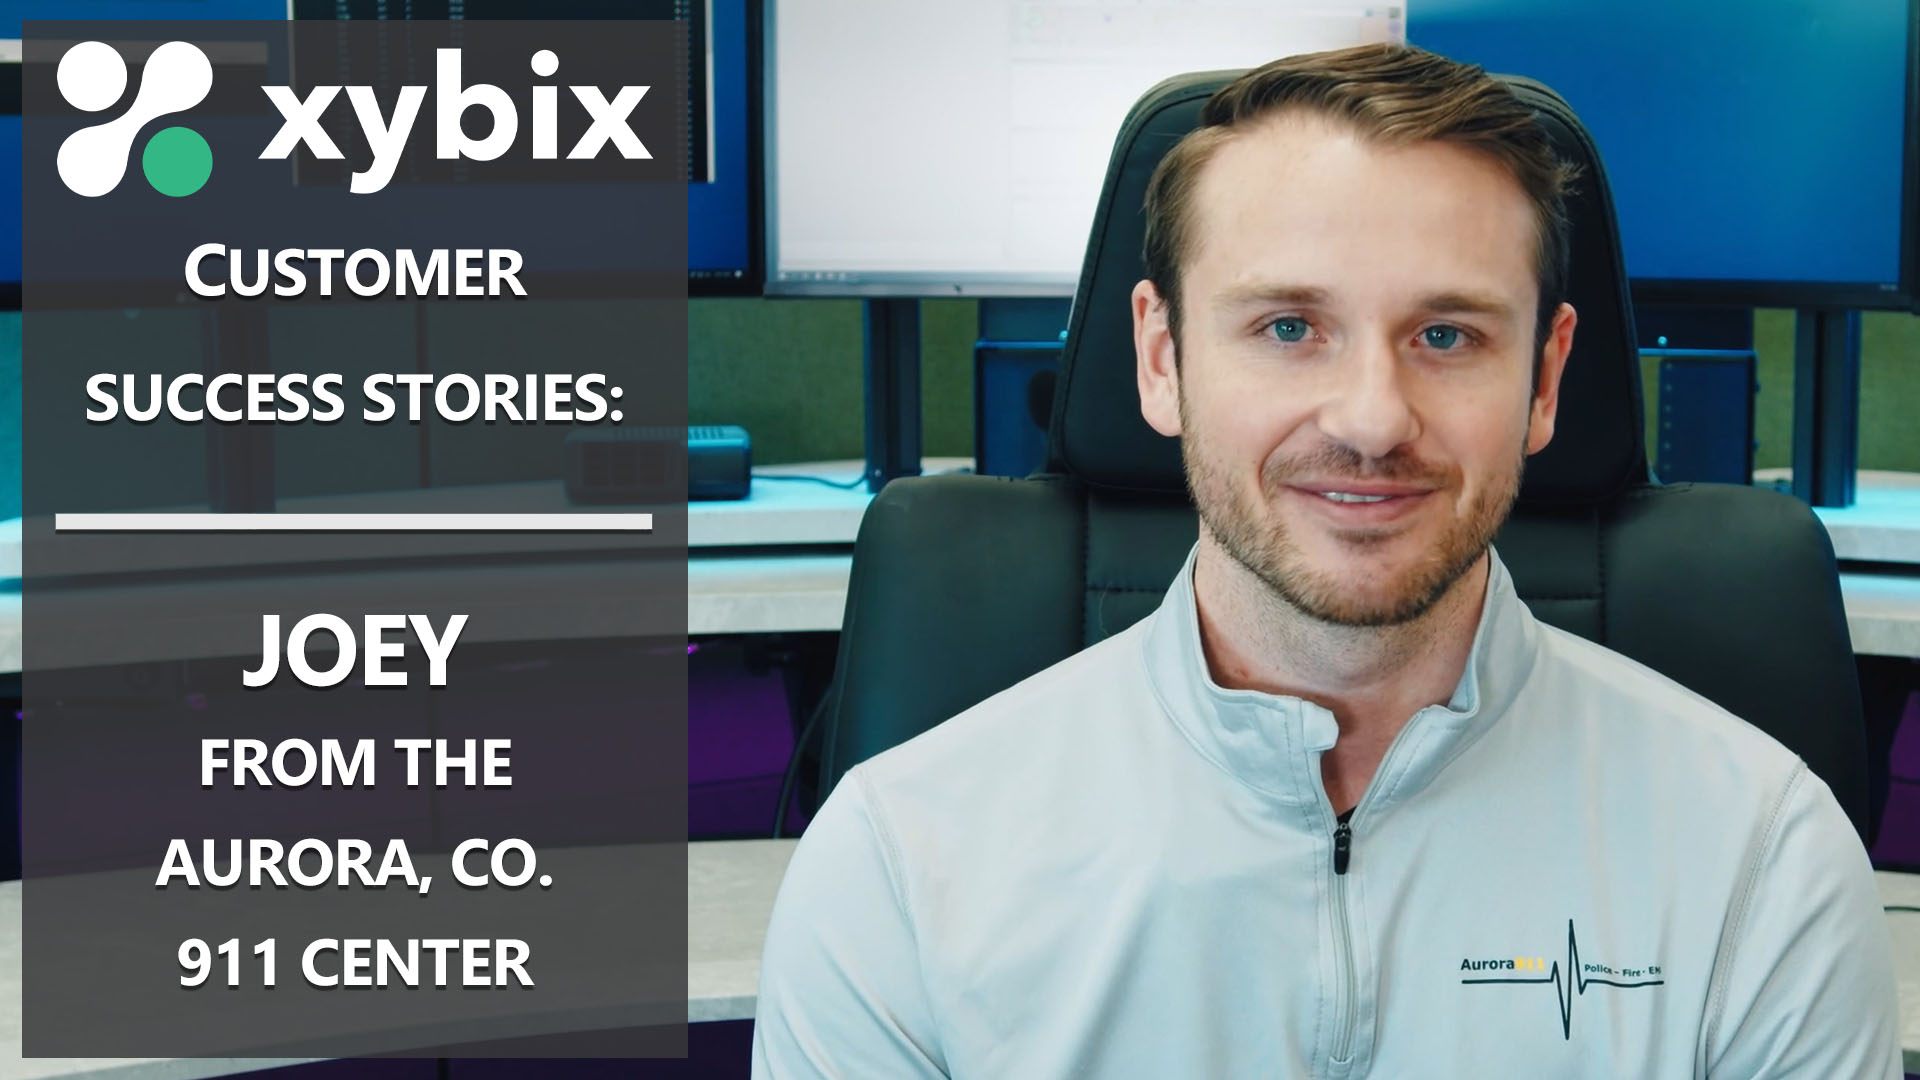 Xybix Testimonials - Joey from the Aurora 911 Center in Colorado